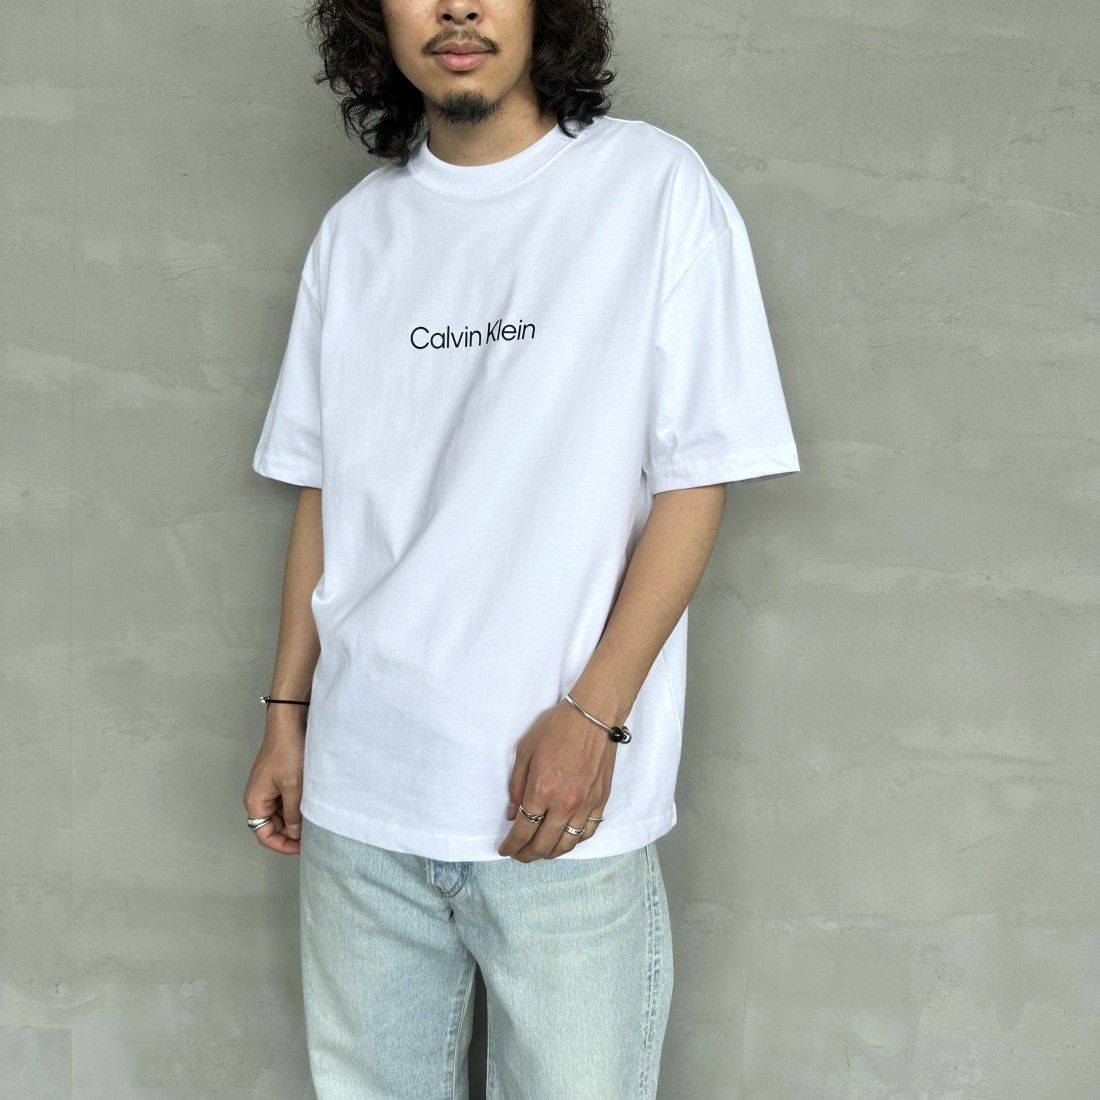 Calvin Klein [カルバンクライン] スタンダード リラックスクルーネックTシャツ [40HM228]